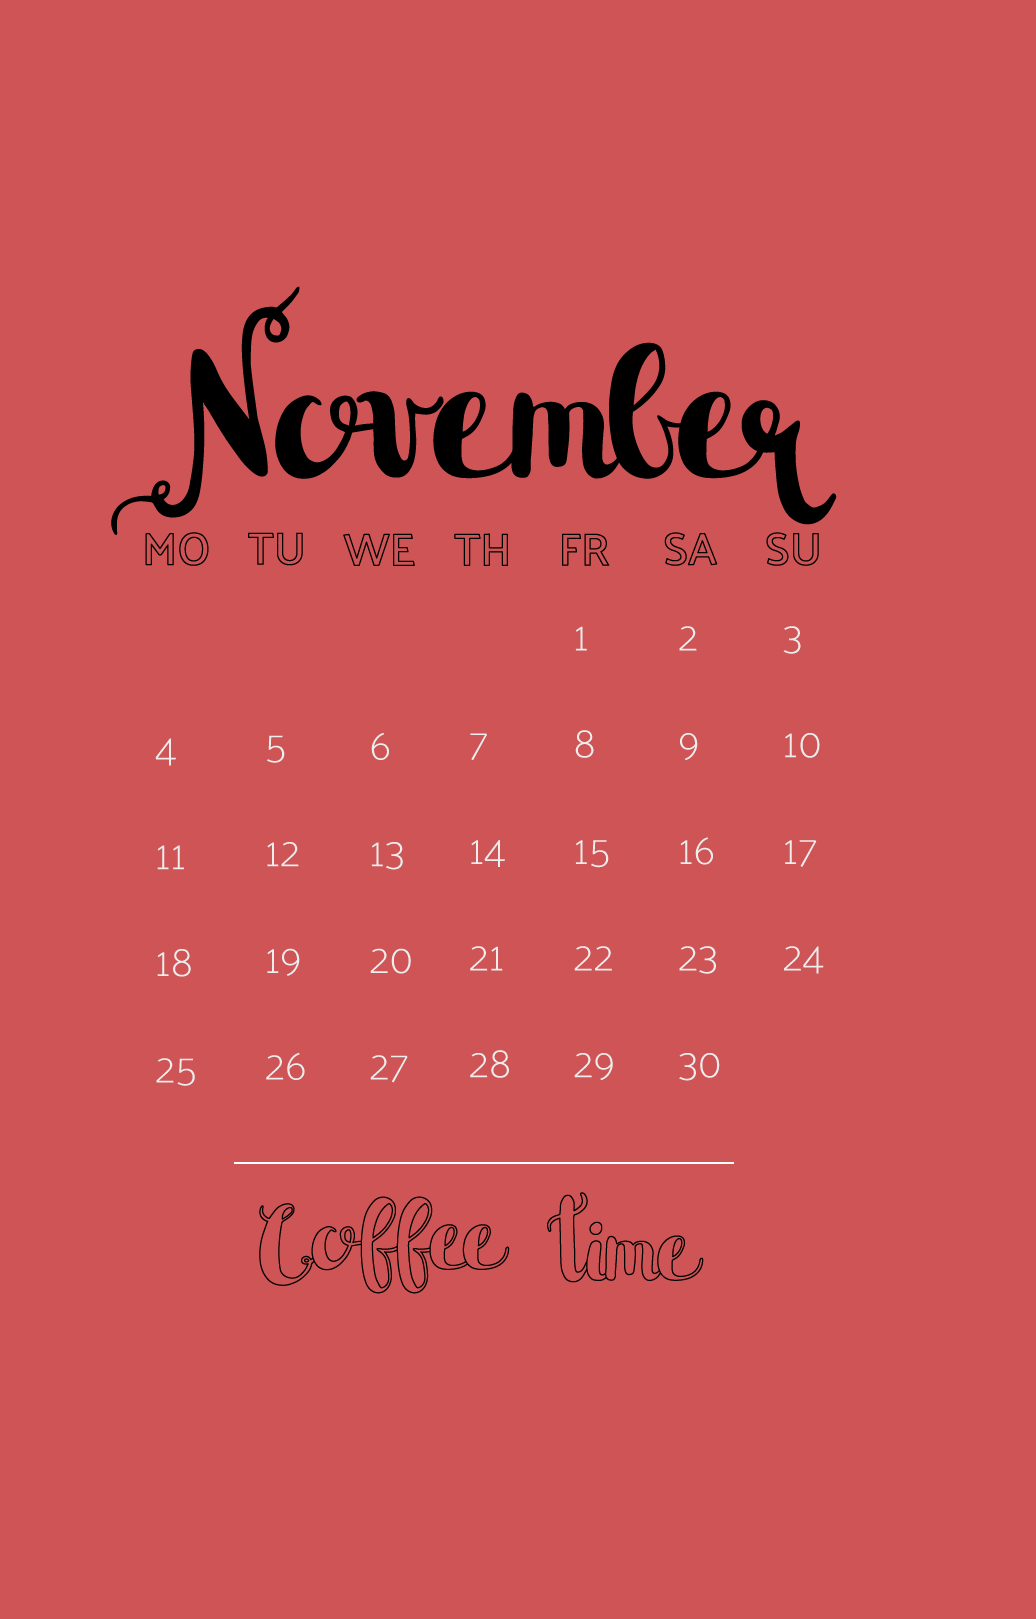 November 2019 Iphone Calendar - Calligraphy - HD Wallpaper 